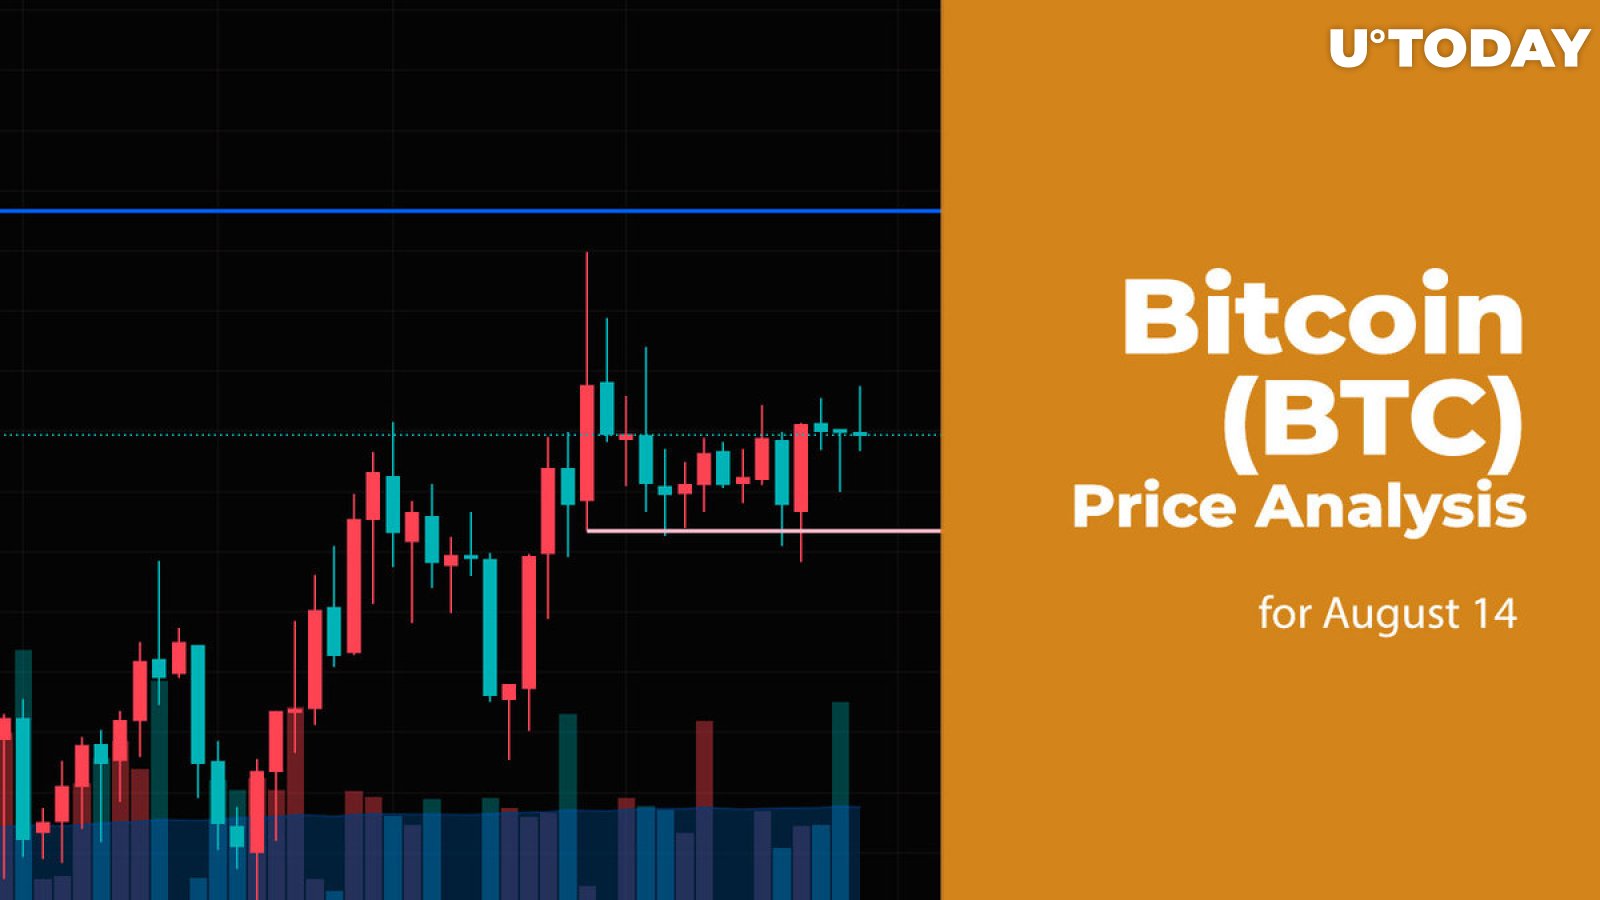 Bitcoin (BTC) Price Analysis for August 14